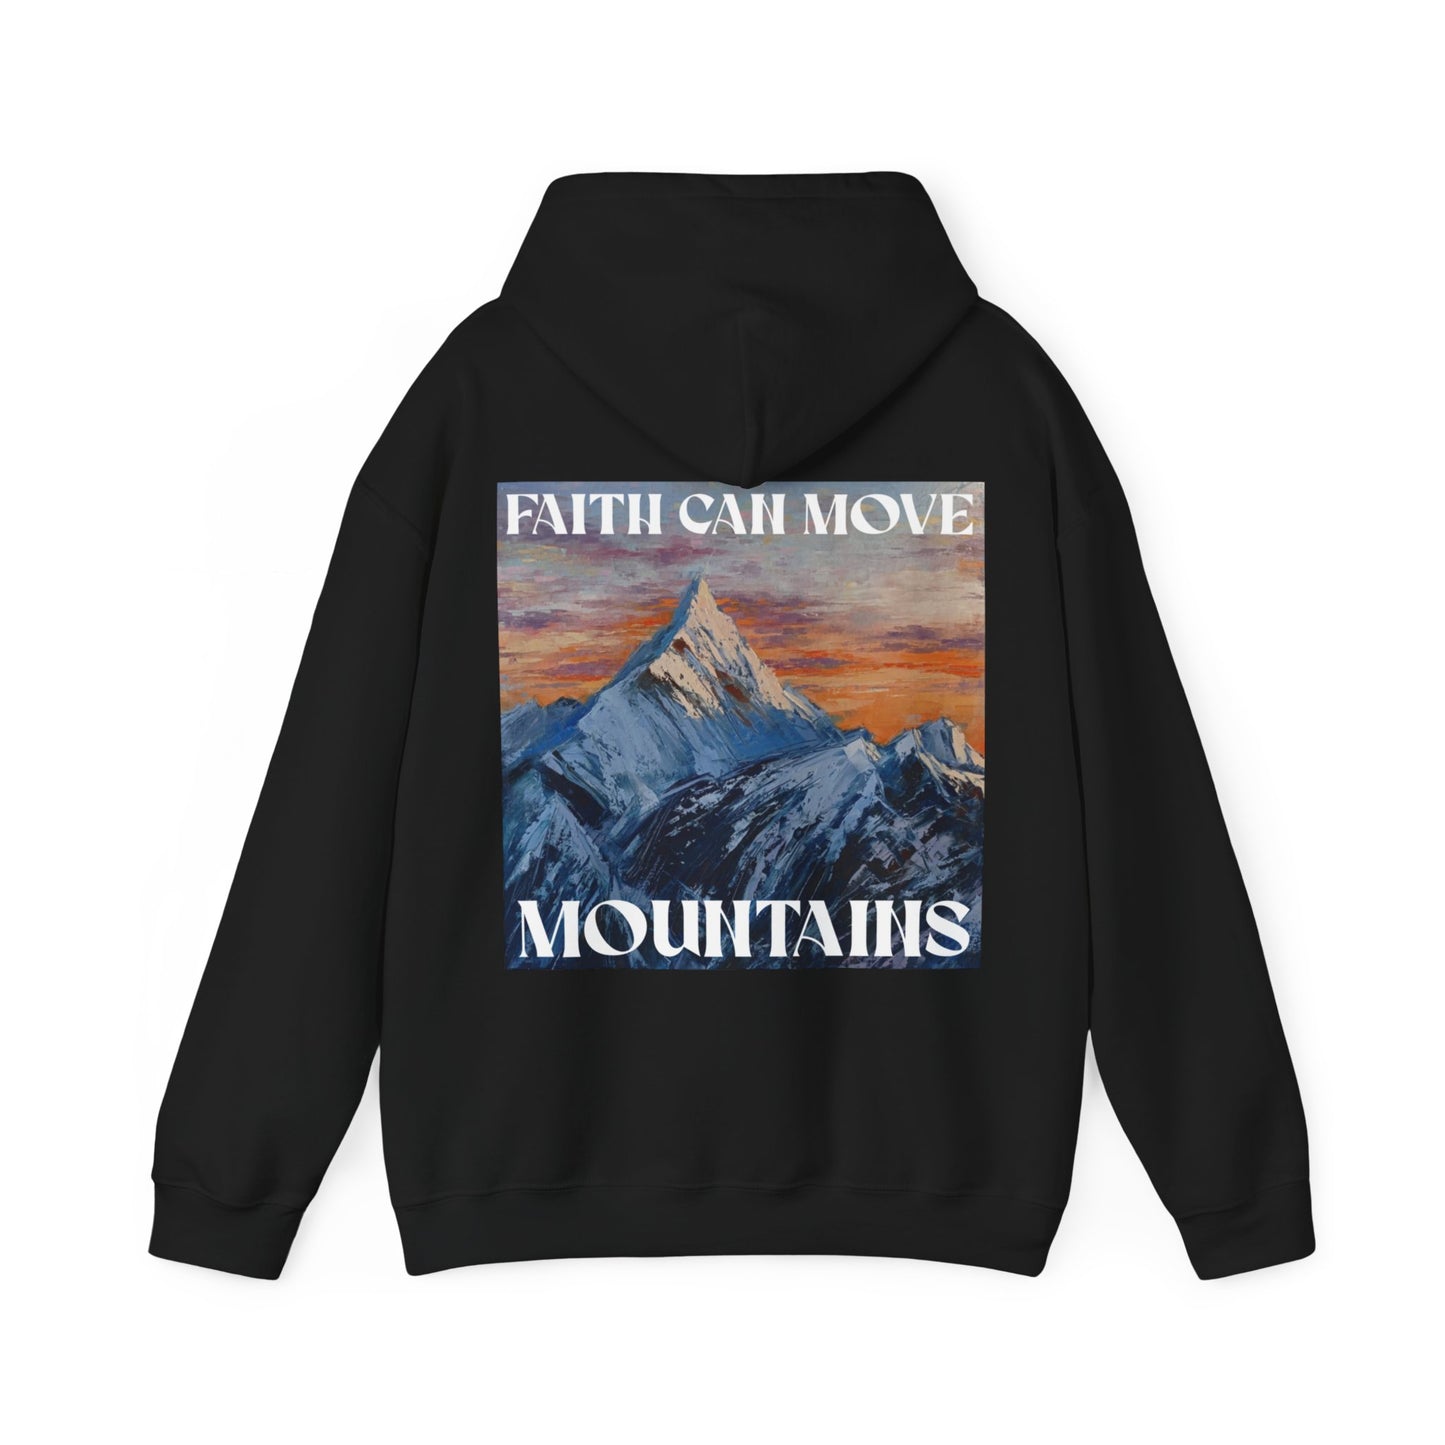 Hoodie Faith can move mountains